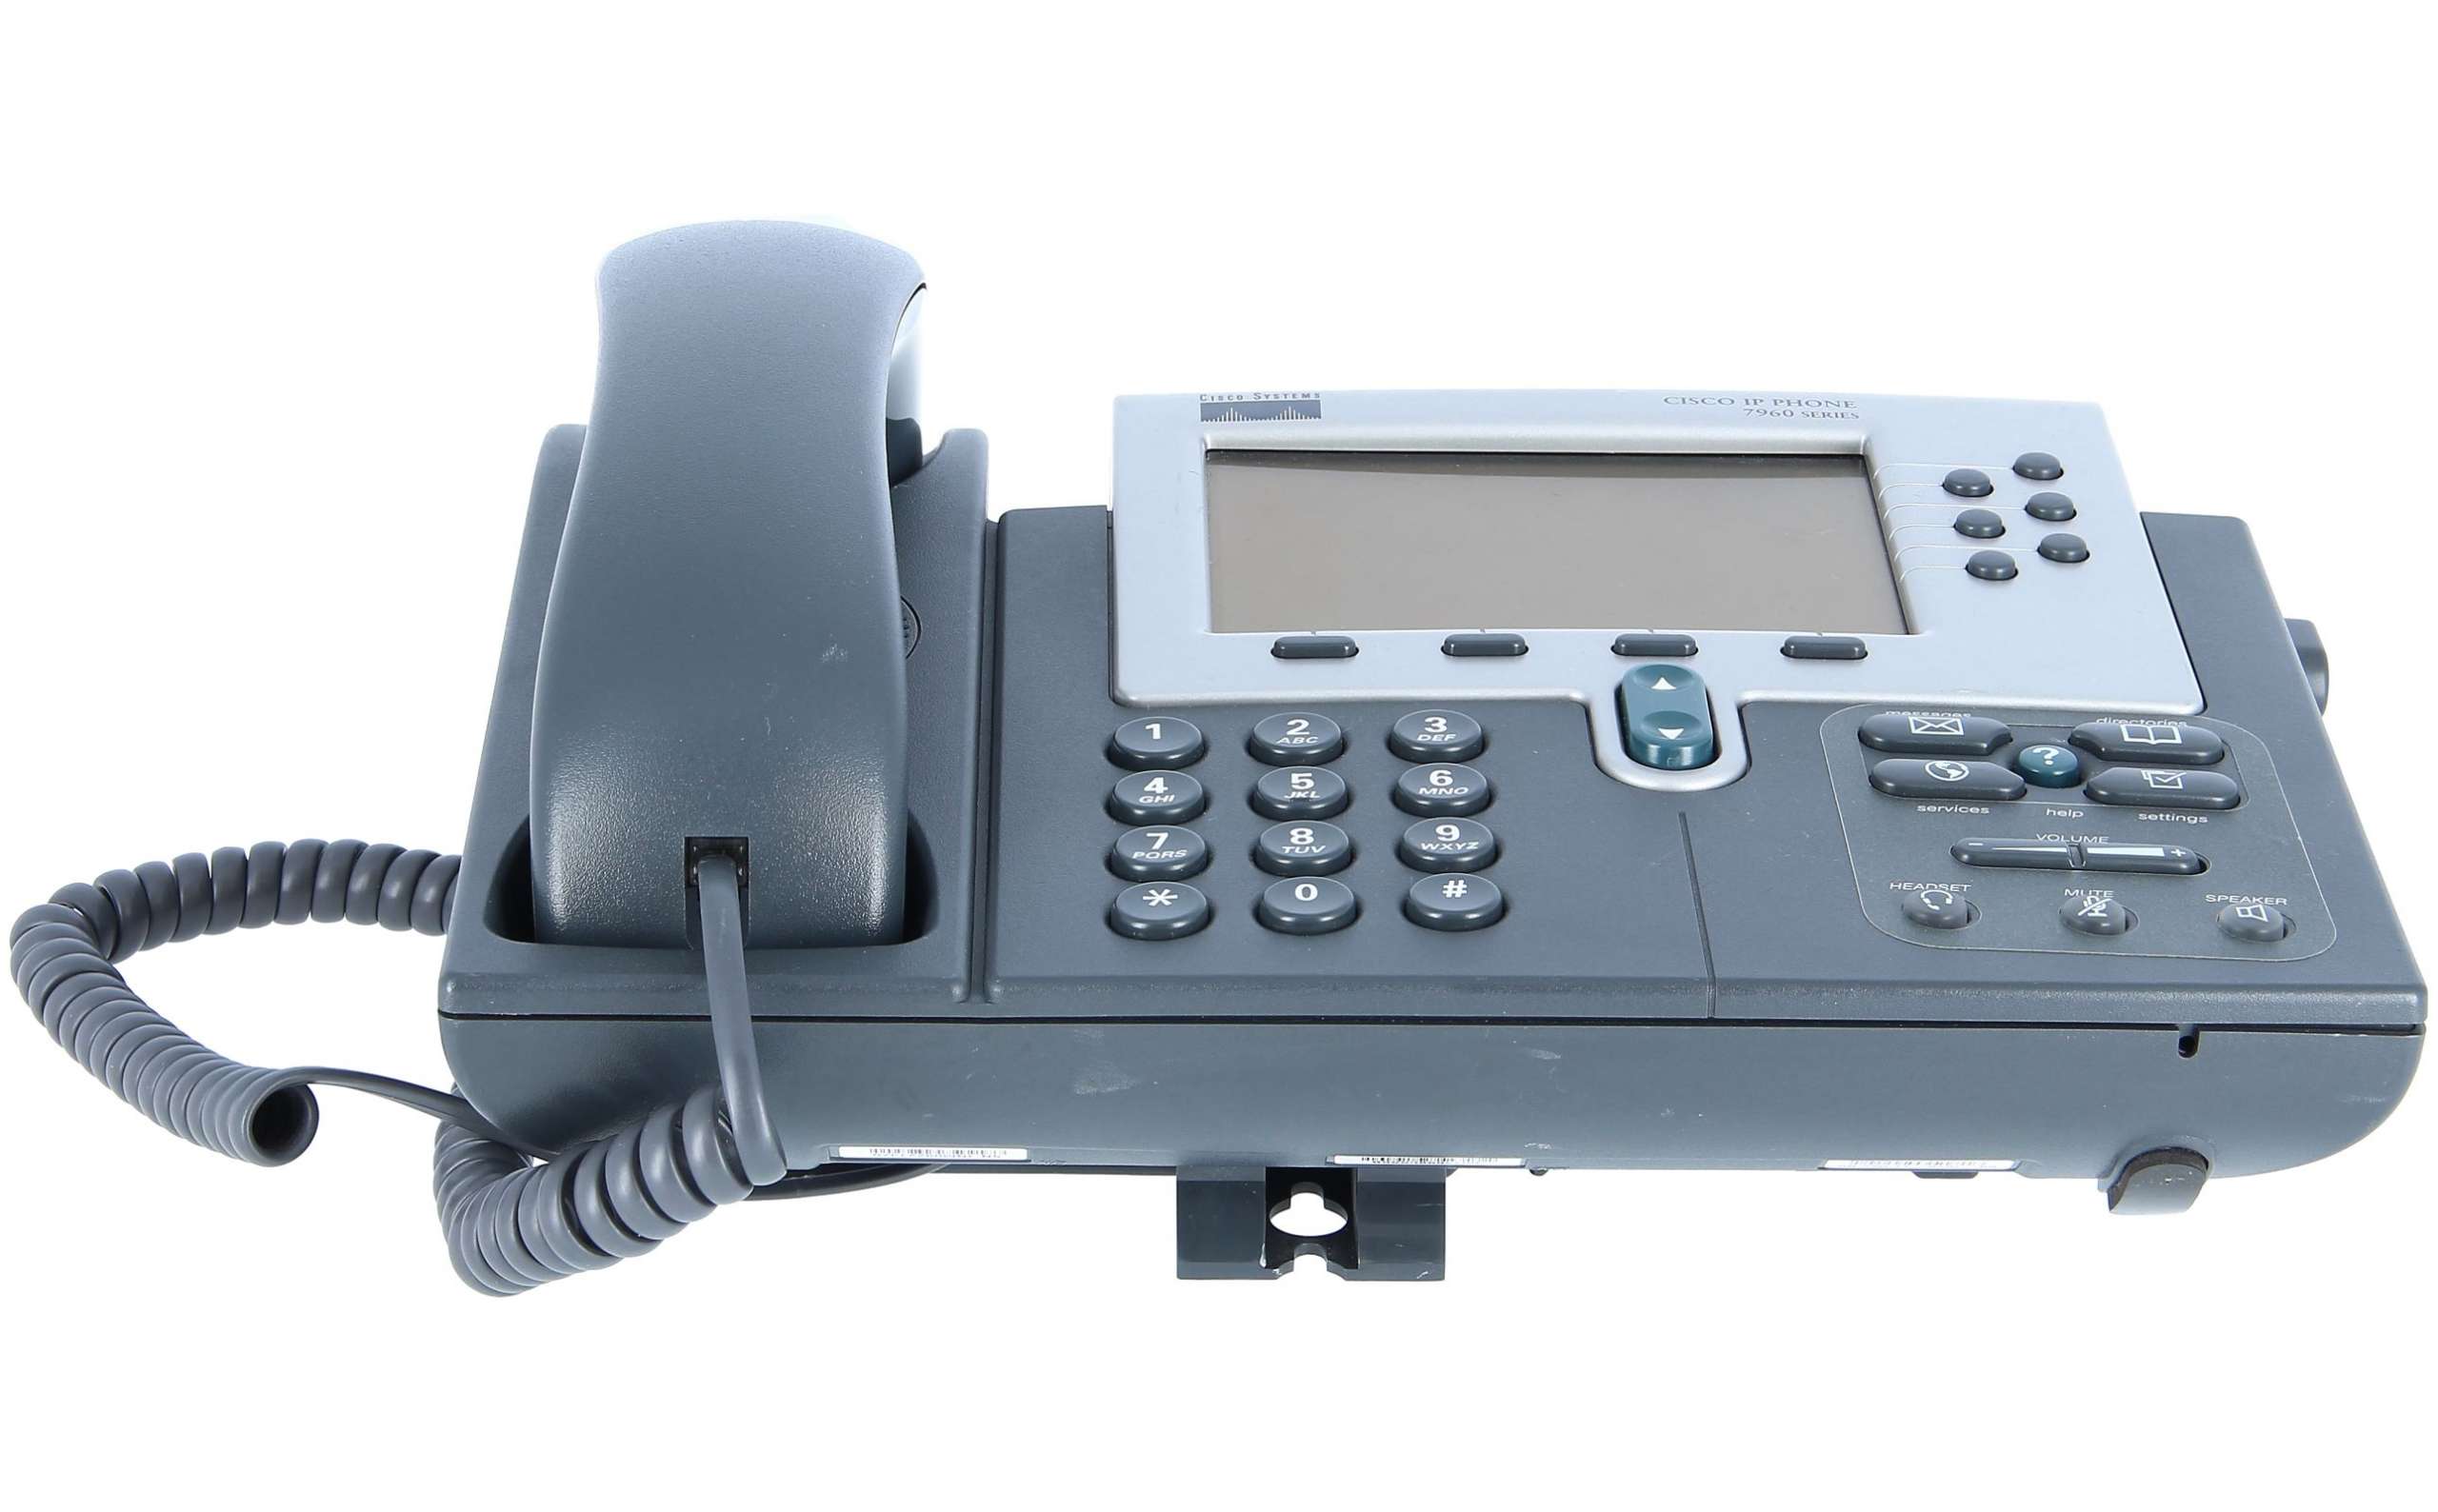 Cisco 7960 Series CP 7960G IP VoIP Display 6-Line Business Phone 